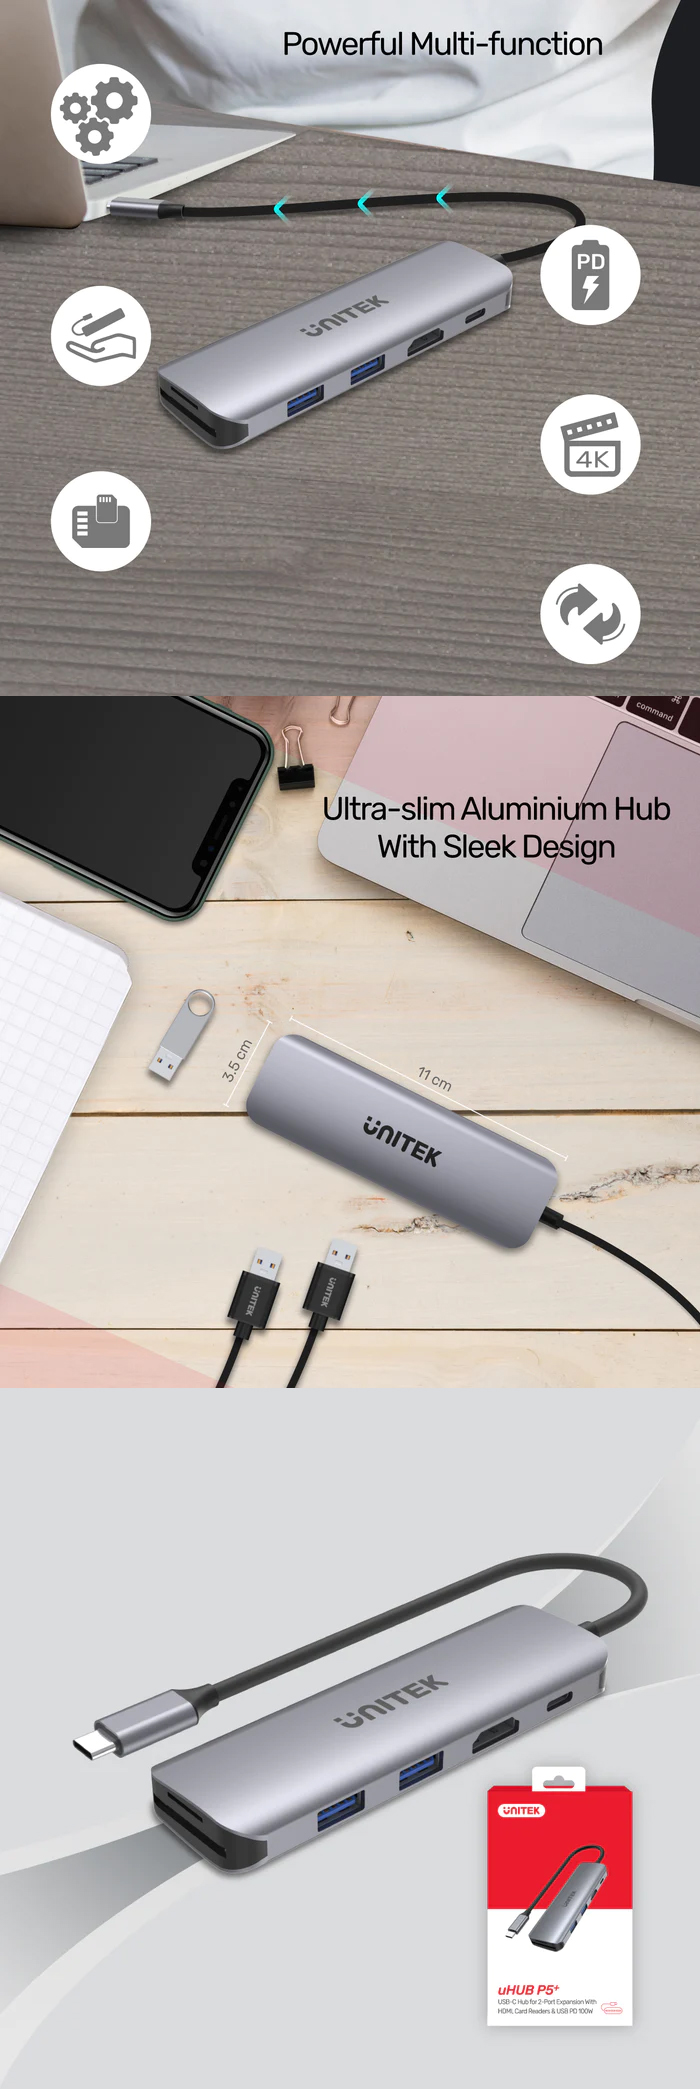 Card-Readers-Unitek-6-in-1-USB3-0-HDMI-Card-Reader-USB-Type-C-Hub-H1107D-3